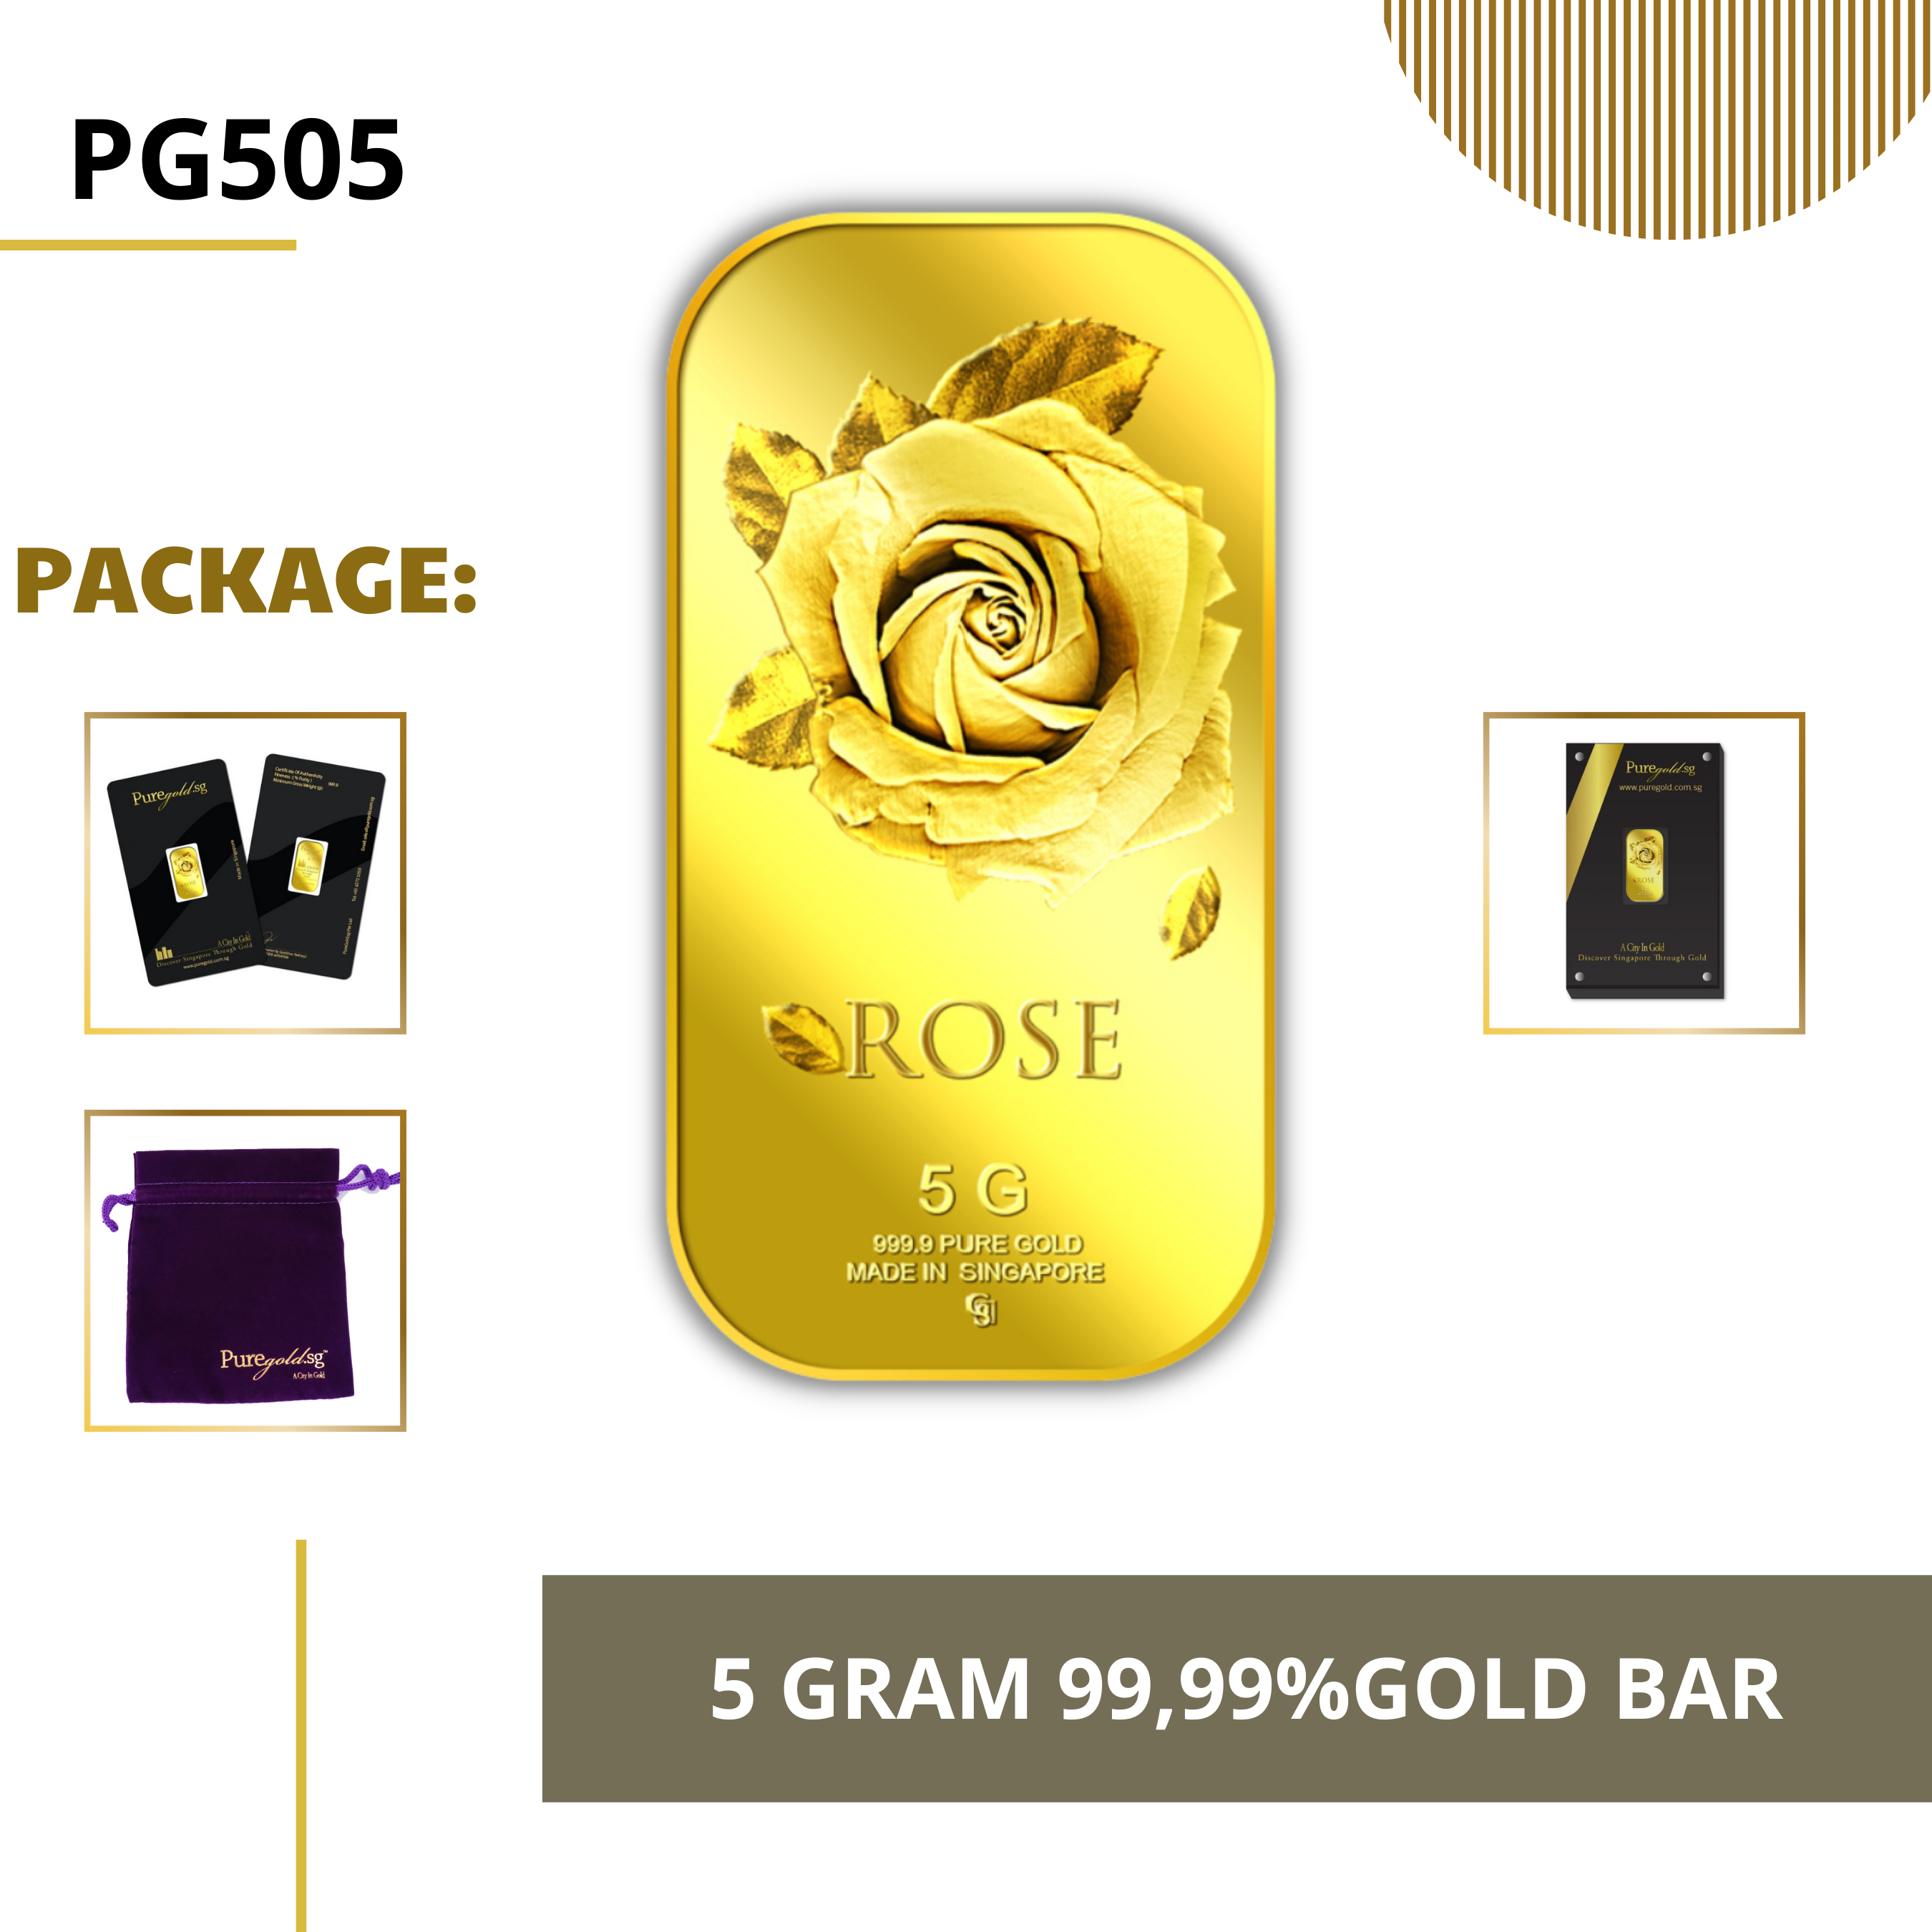 PURE GOLD 99.99% ทองคำแท่ง / 5Gram Big Rose gold bar / ทองคำแท้จากสิงคโปร์ / ทองคำ 5 กรัม / ทอง 99.99% *การันตีทองแท้*